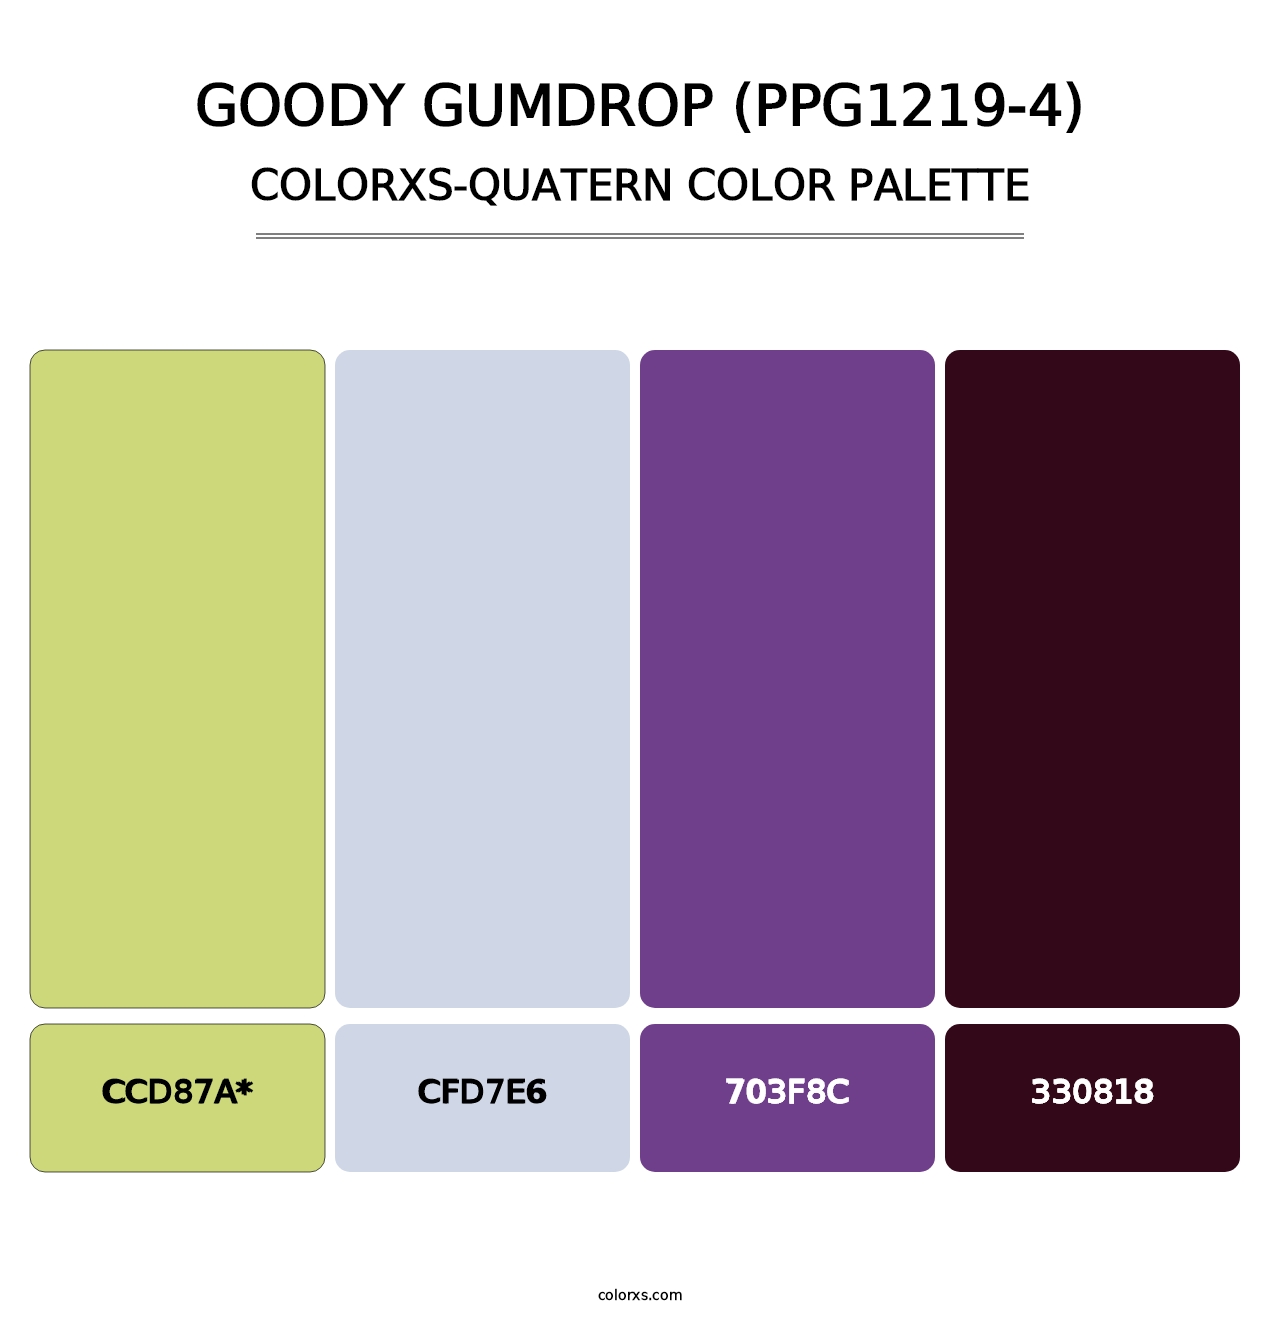 Goody Gumdrop (PPG1219-4) - Colorxs Quatern Palette